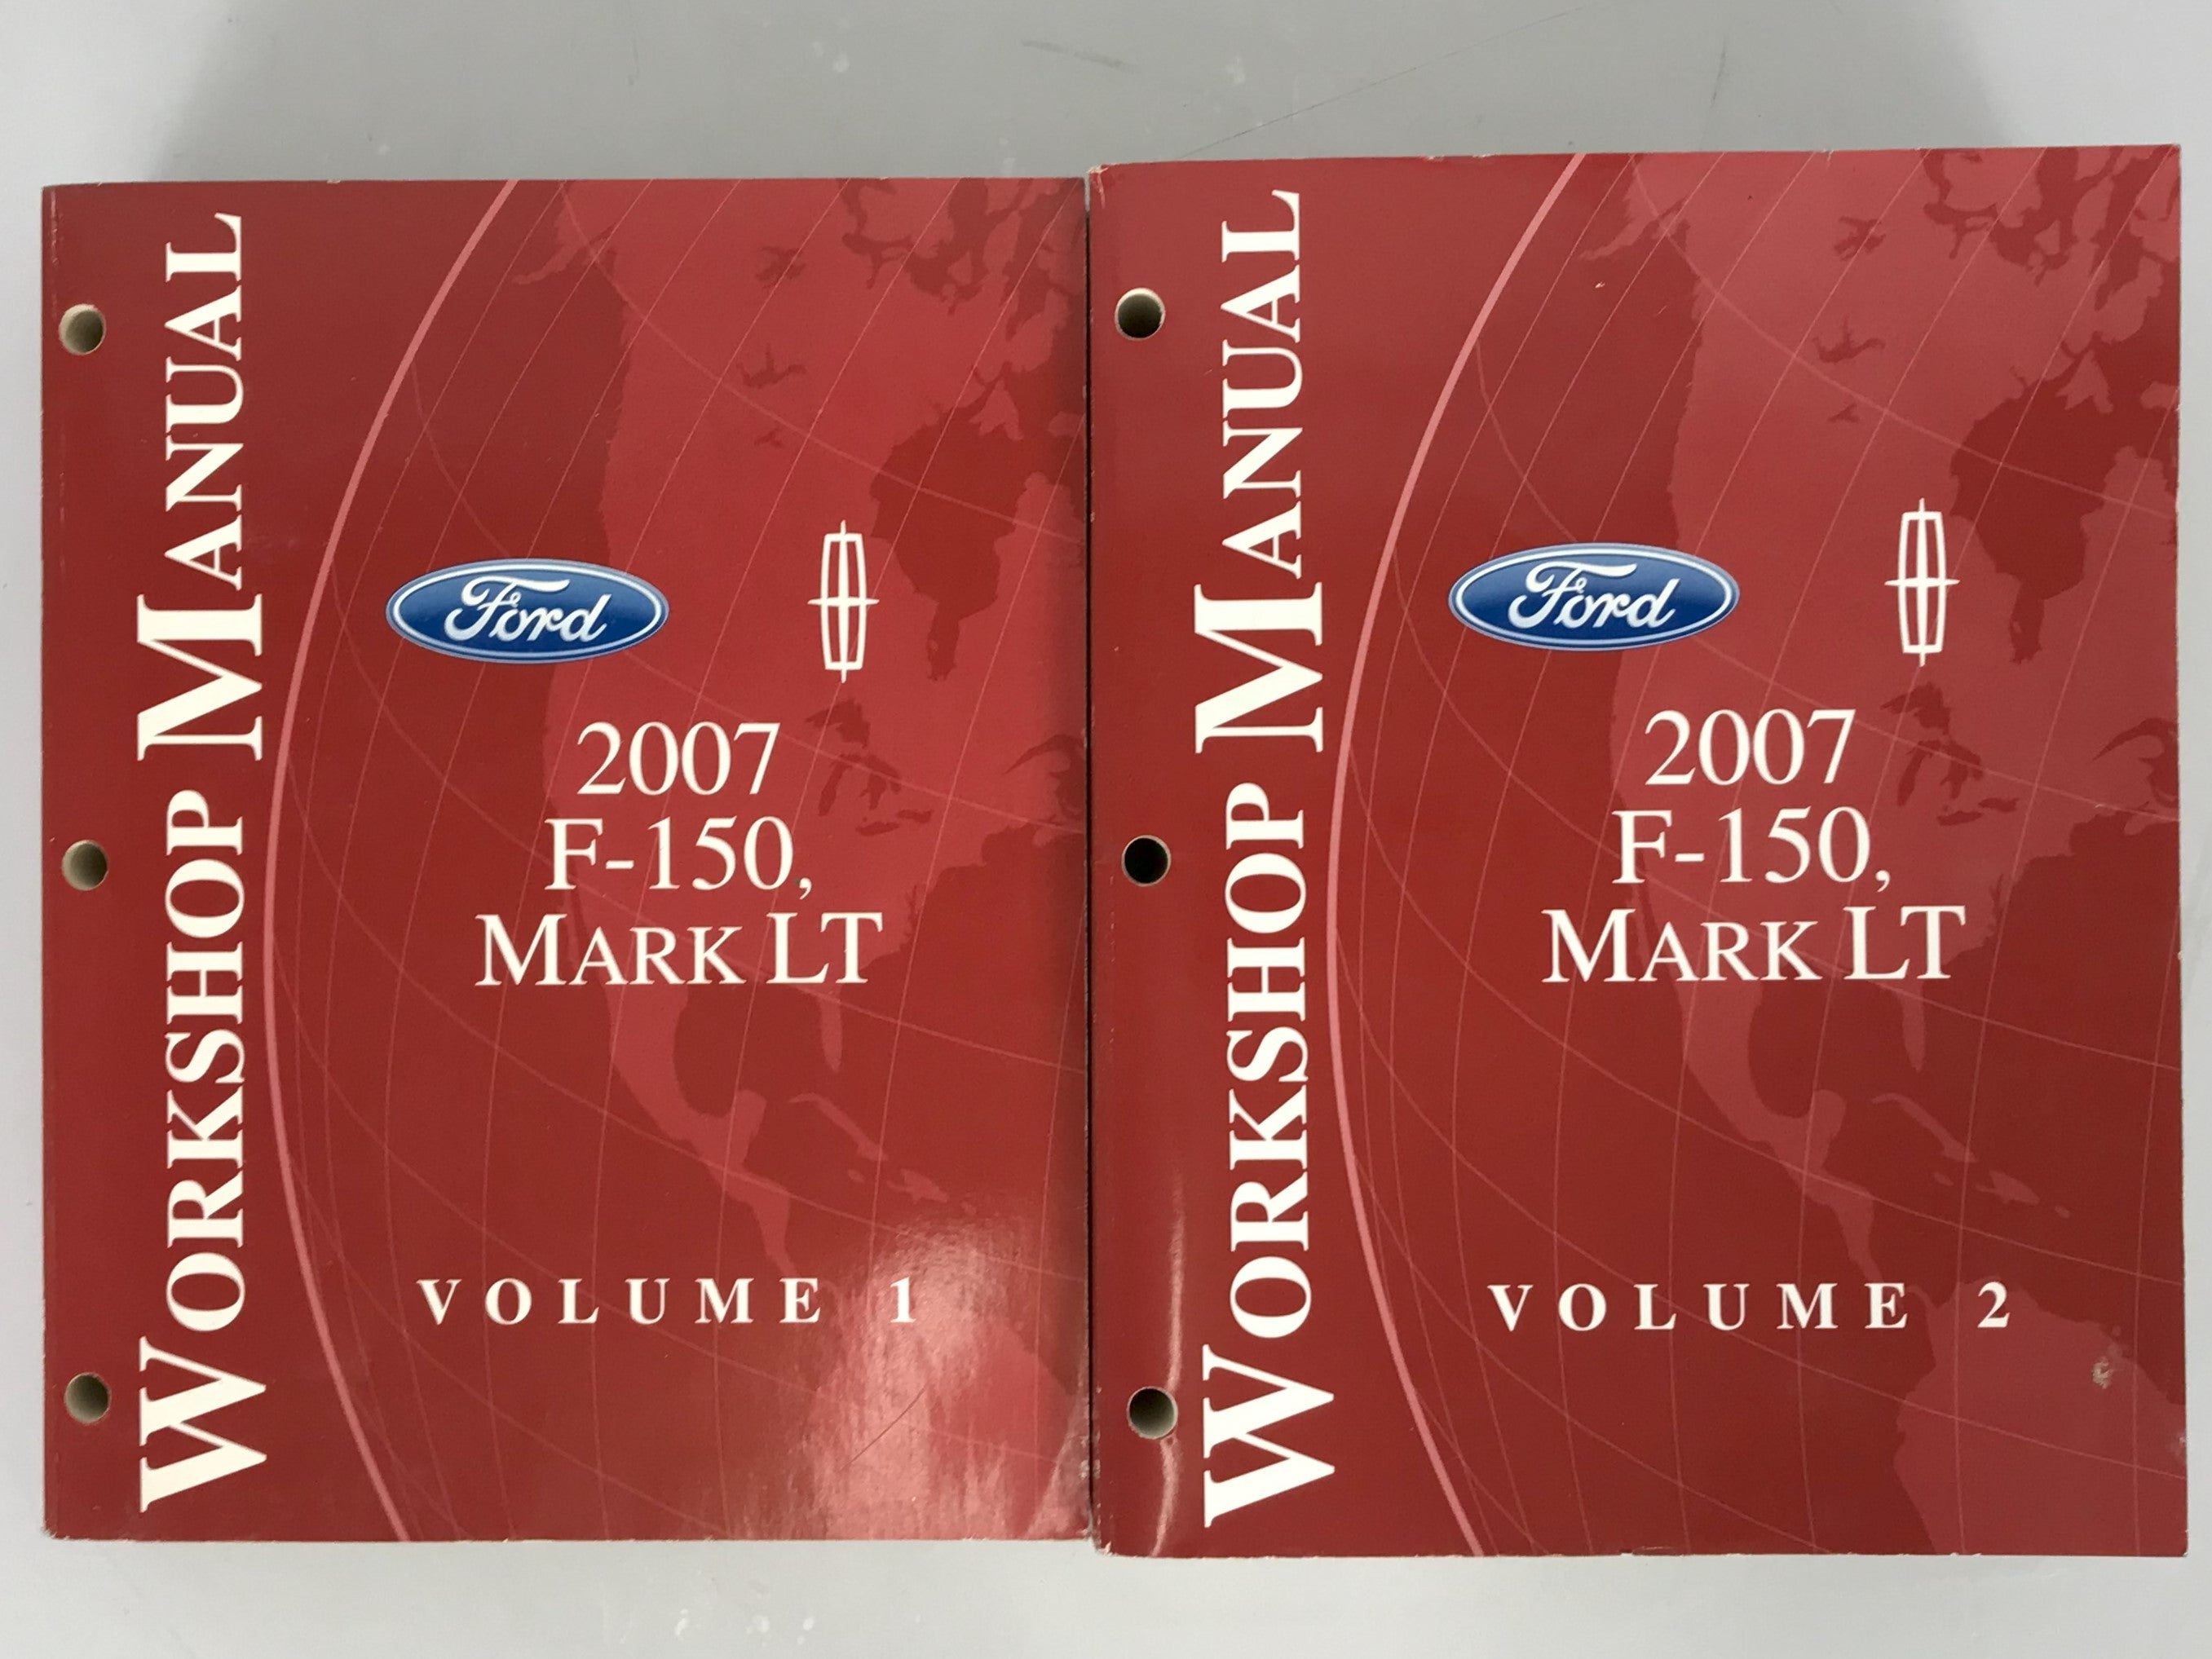 Ford 2007 F-150 Mark LT Workshop Manual Vol 1-2